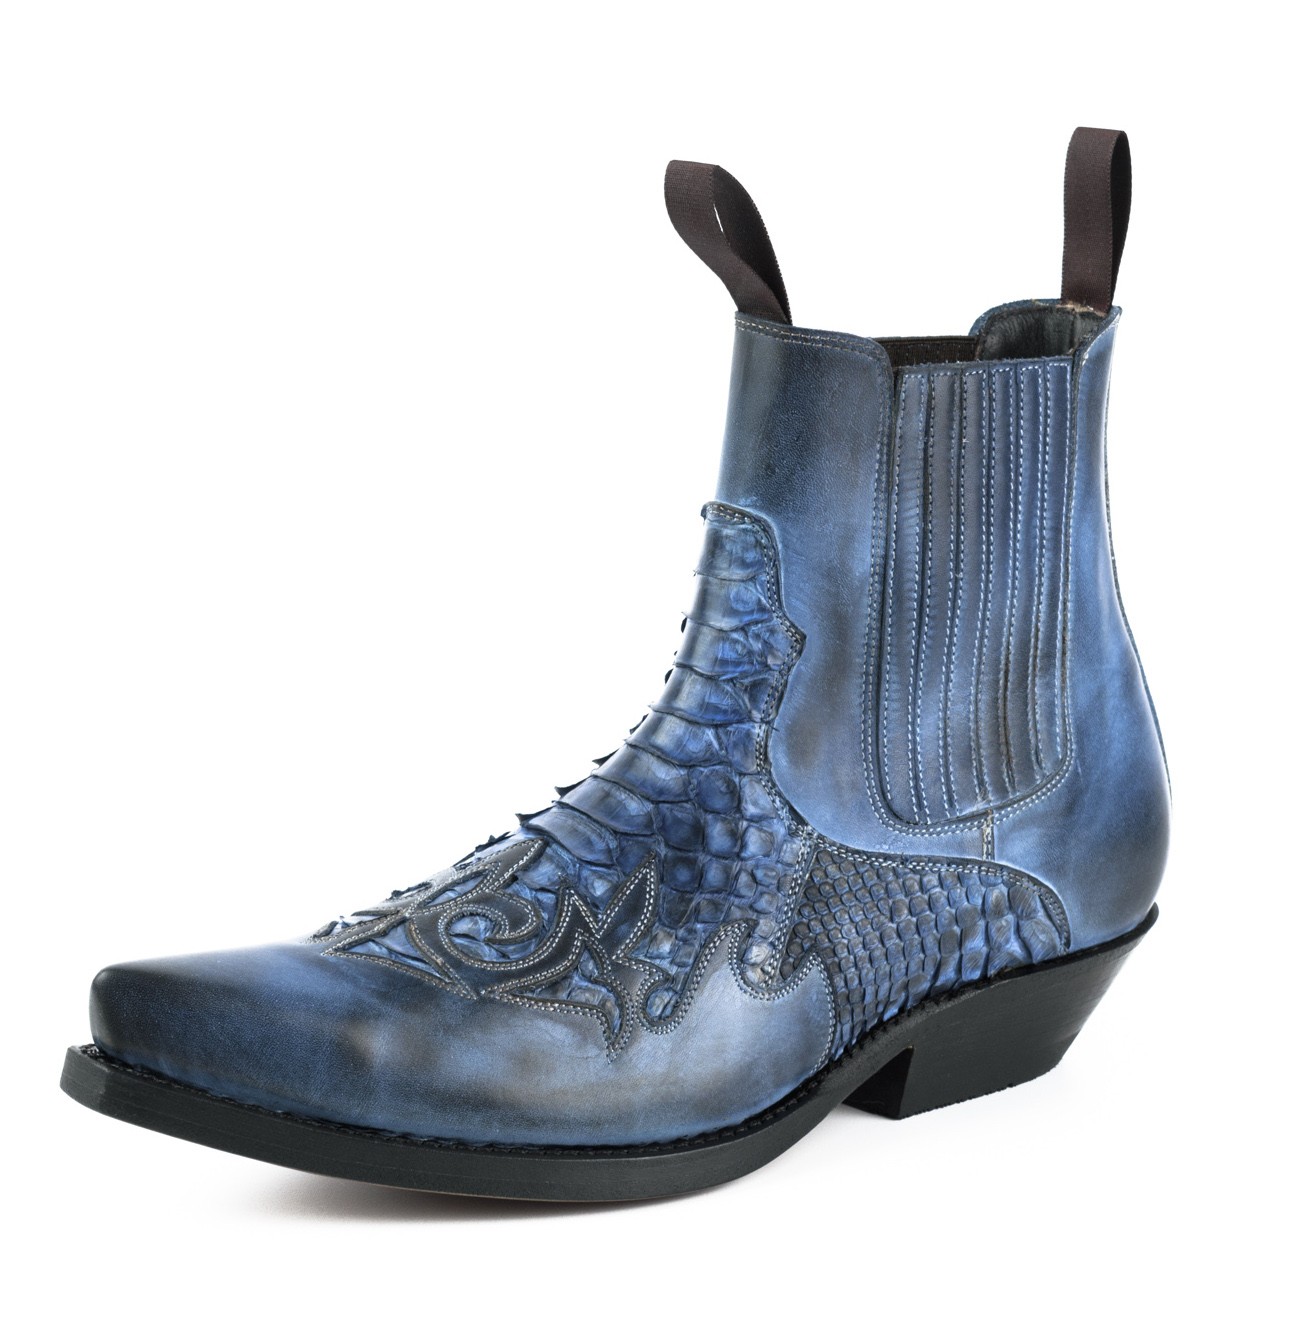 Blue snakeskin cowboy ankle boots for men LOW CUT LEATHER SNAKESKIN BLUE  DENIM BOOTS